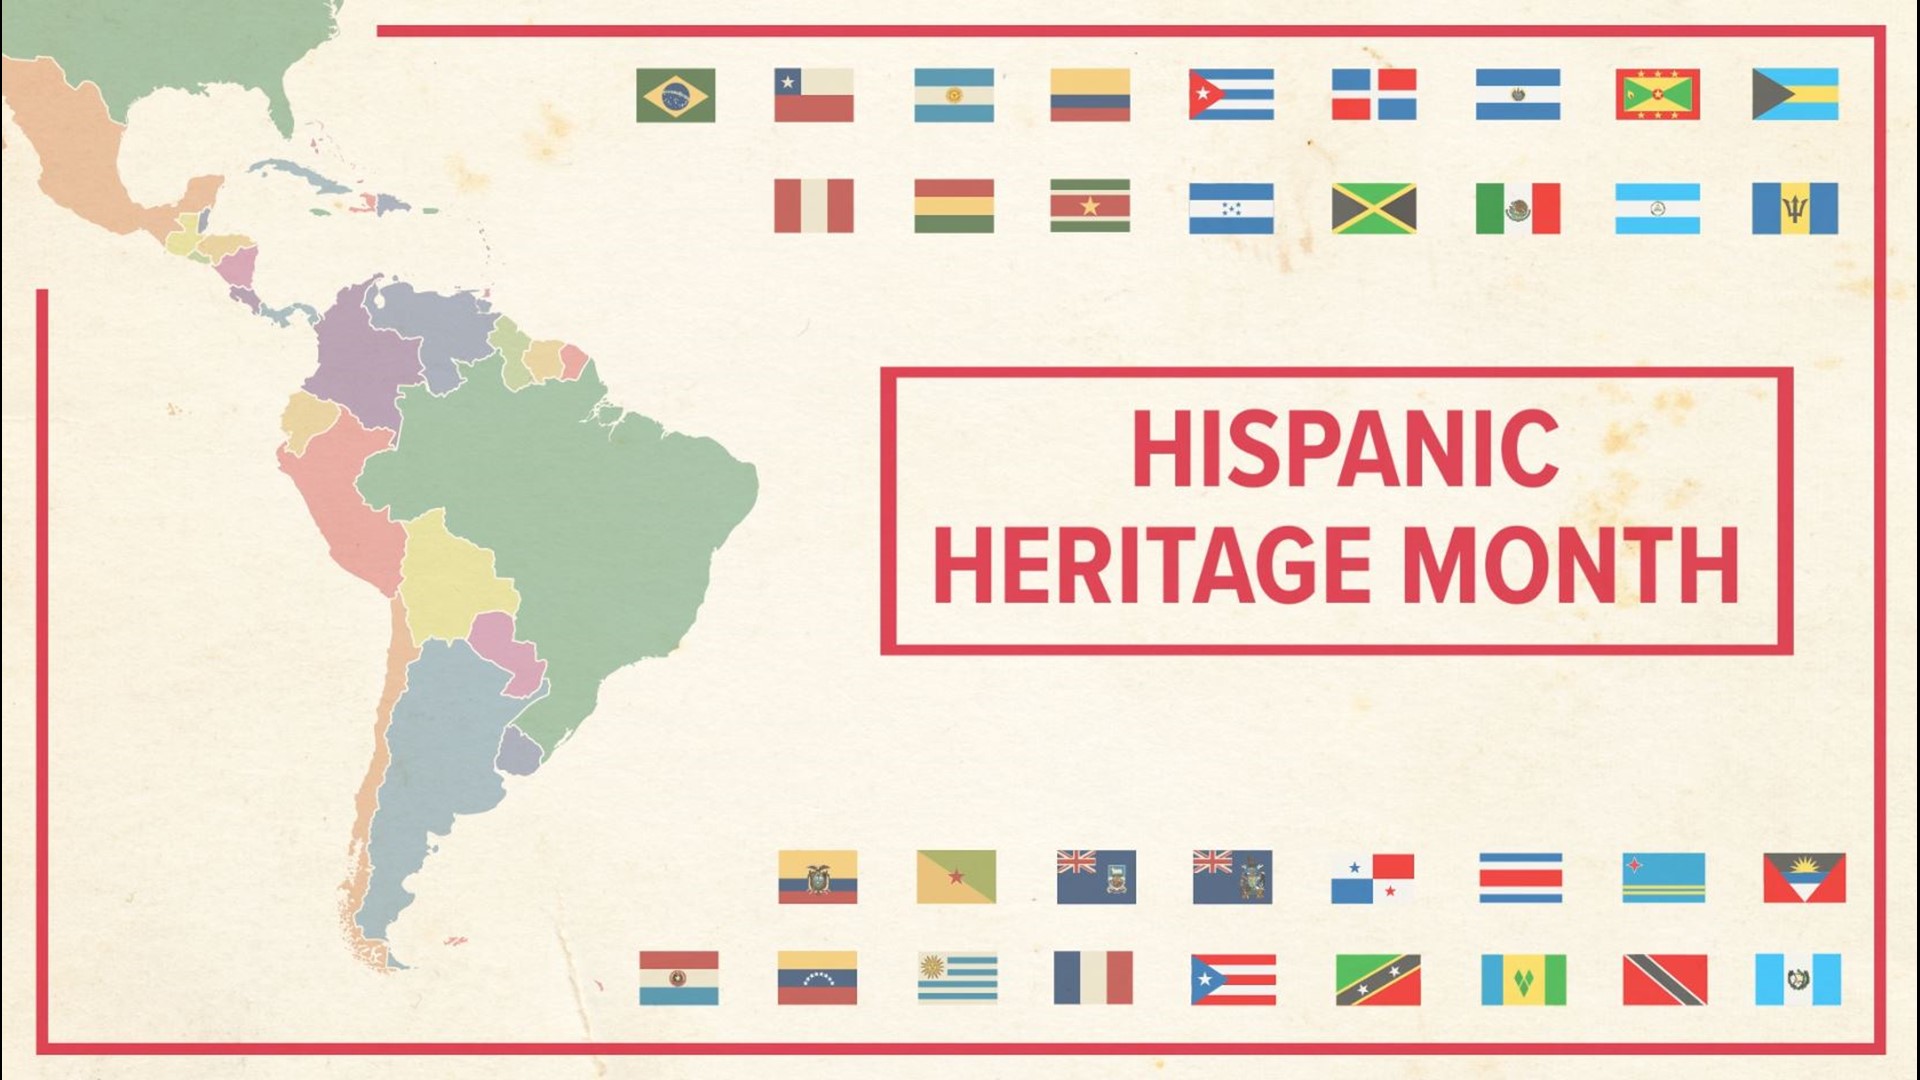 Hispanic Heritage Month interview with Andrew Bribriesco